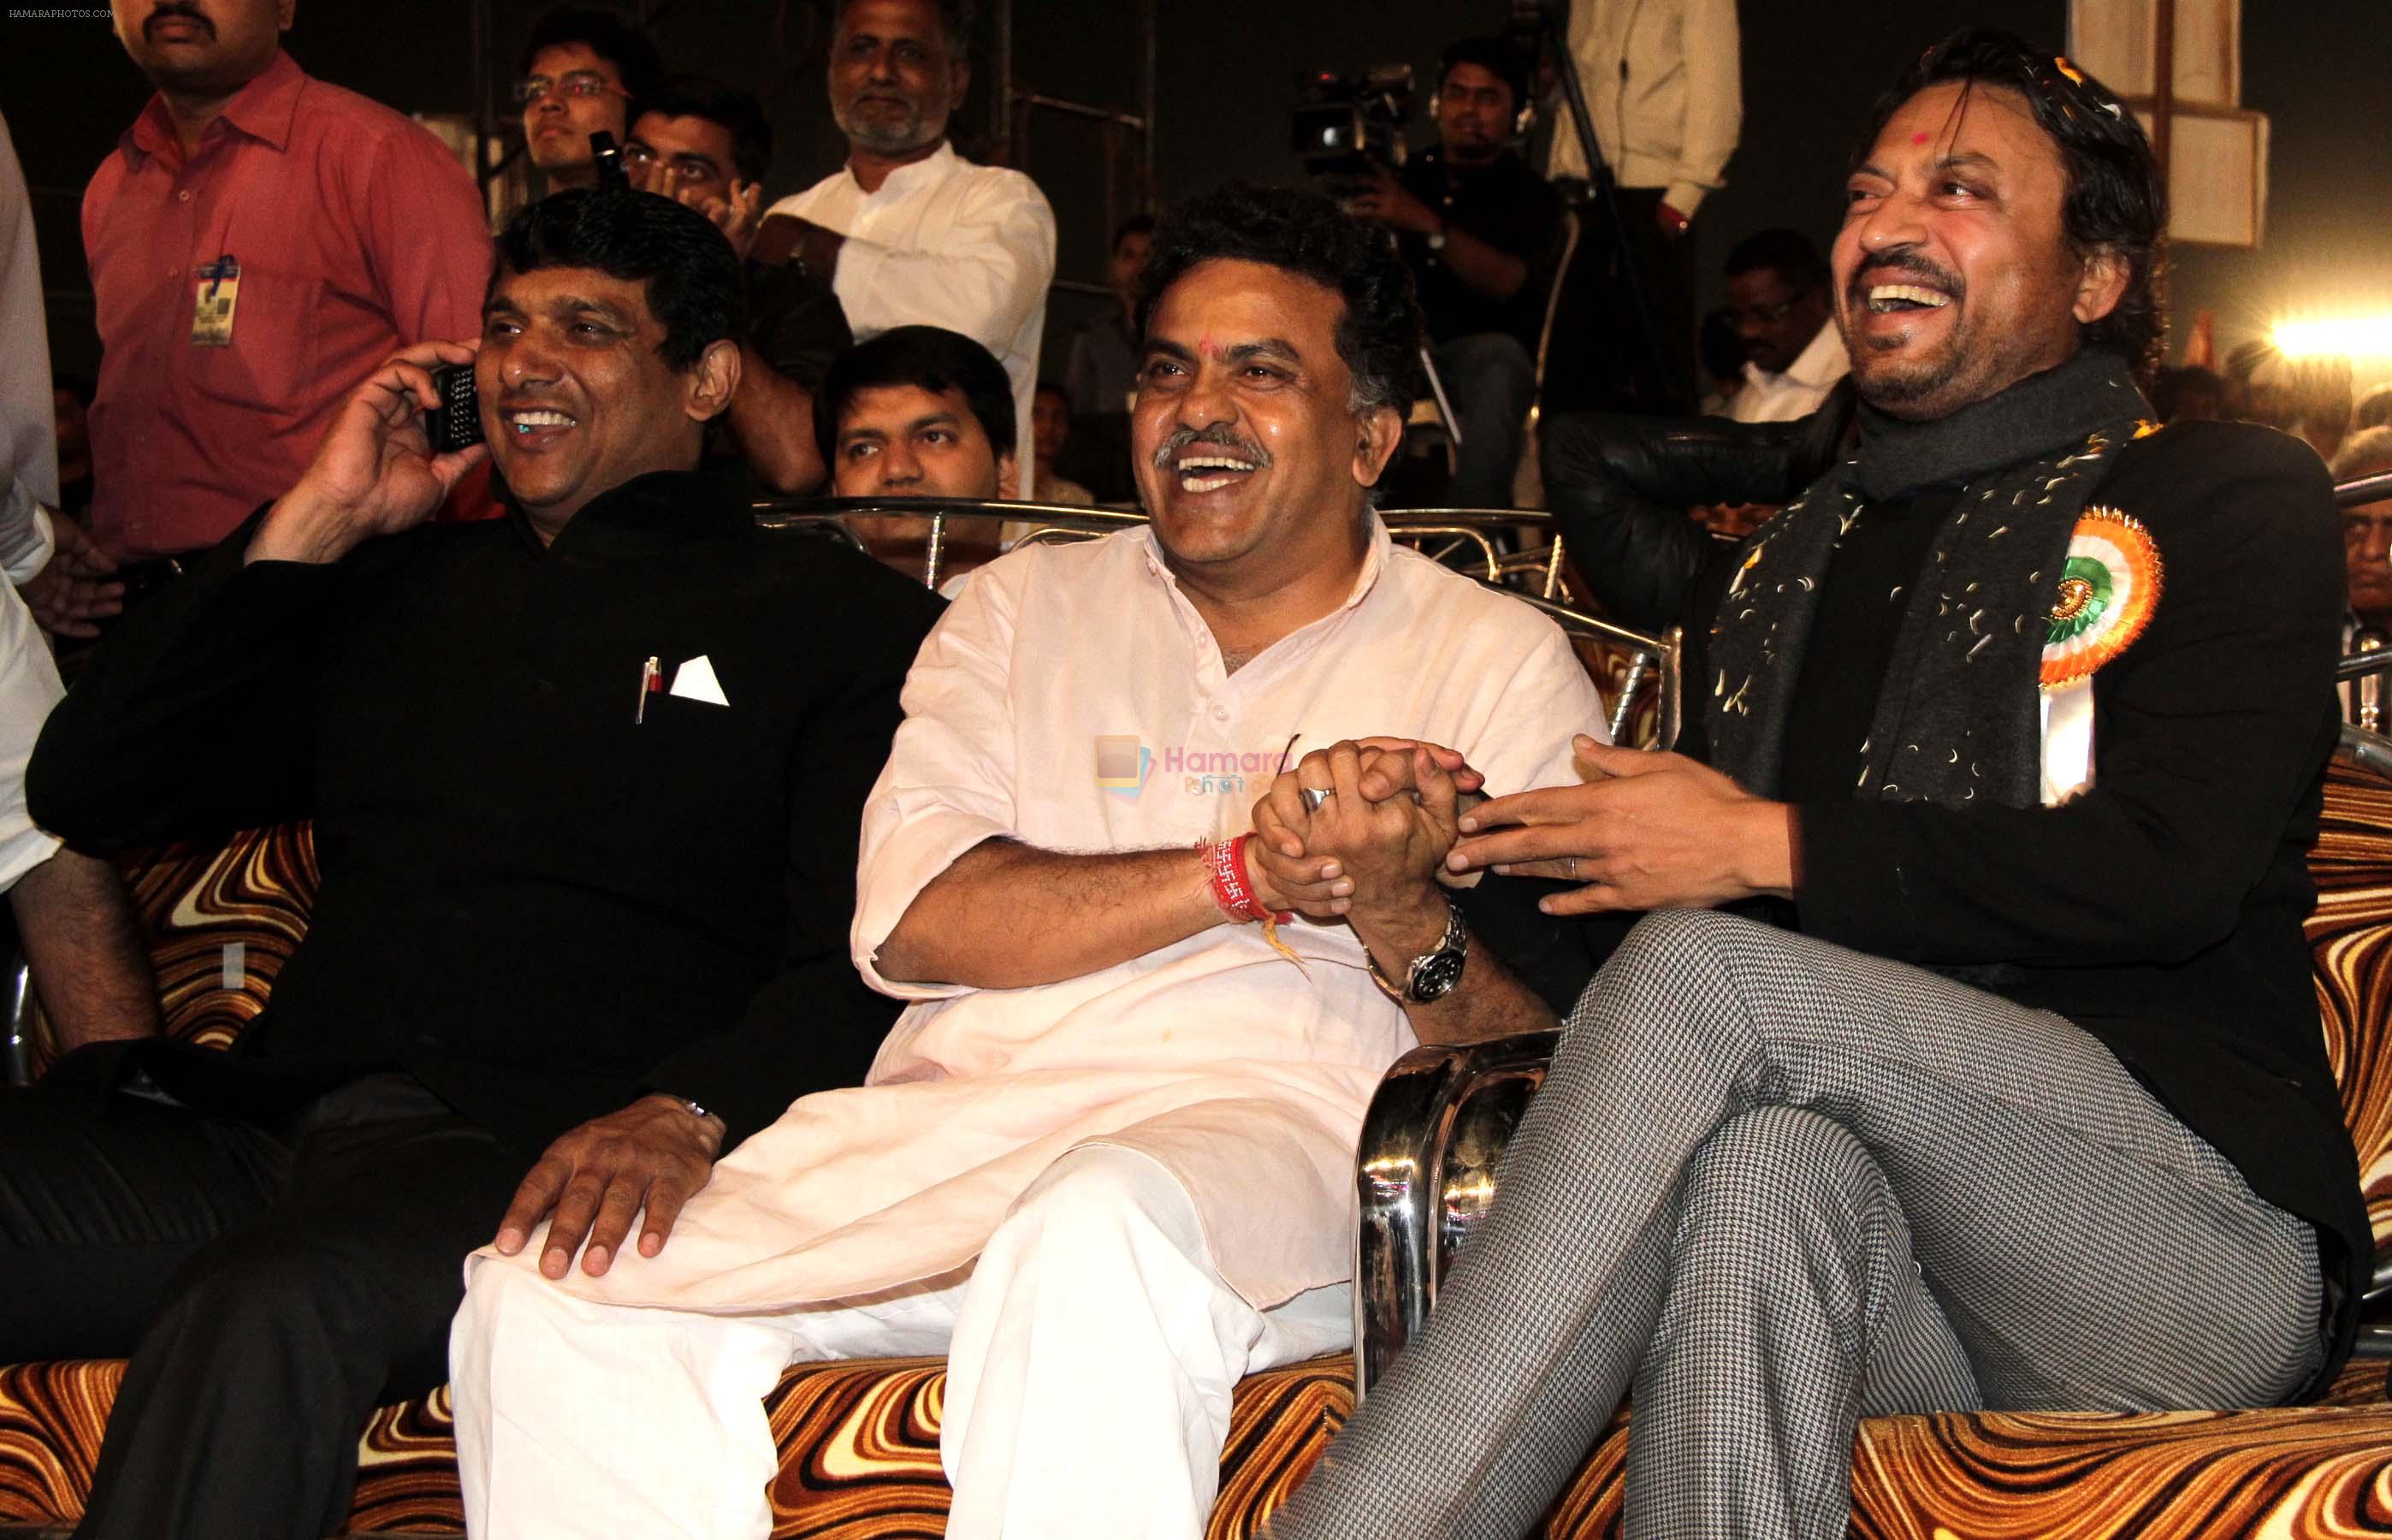 aslam shaikh,sanjay nirupam & irfan khan at closing of Malad sports fiesta organised by MLA Aslam Shaikh